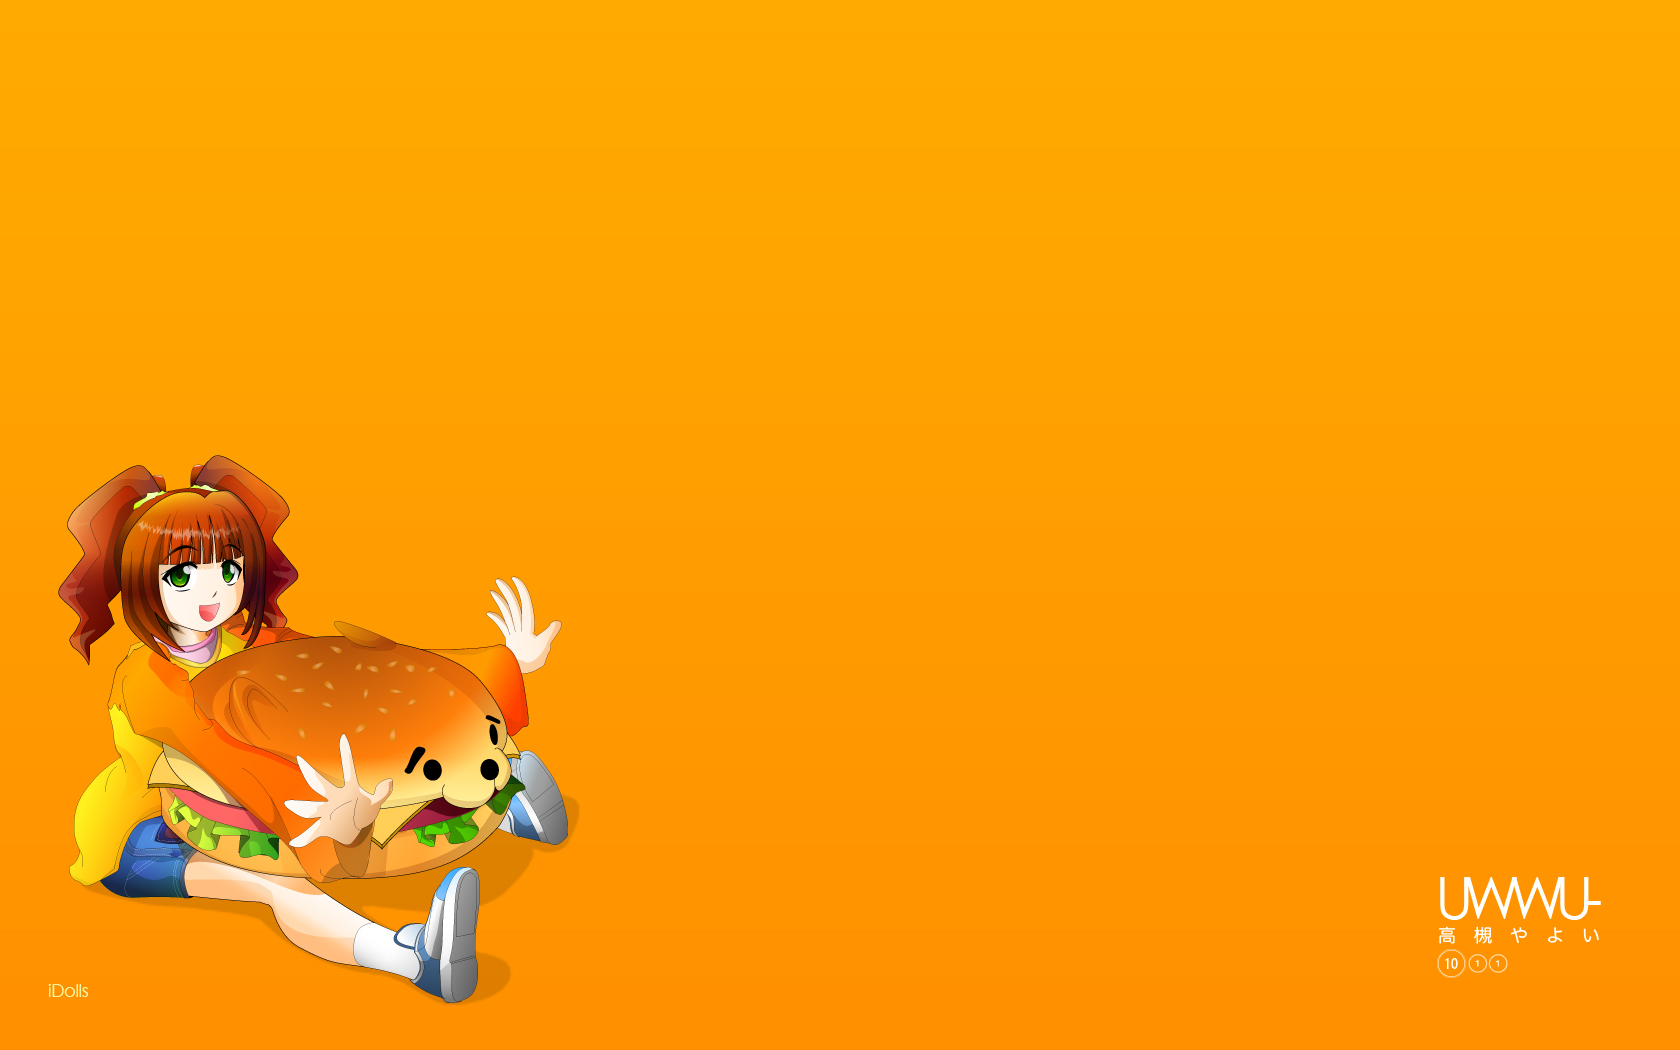 342163 descargar imagen animado, the idolm@ster, color naranja), yayoi takatsuki: fondos de pantalla y protectores de pantalla gratis